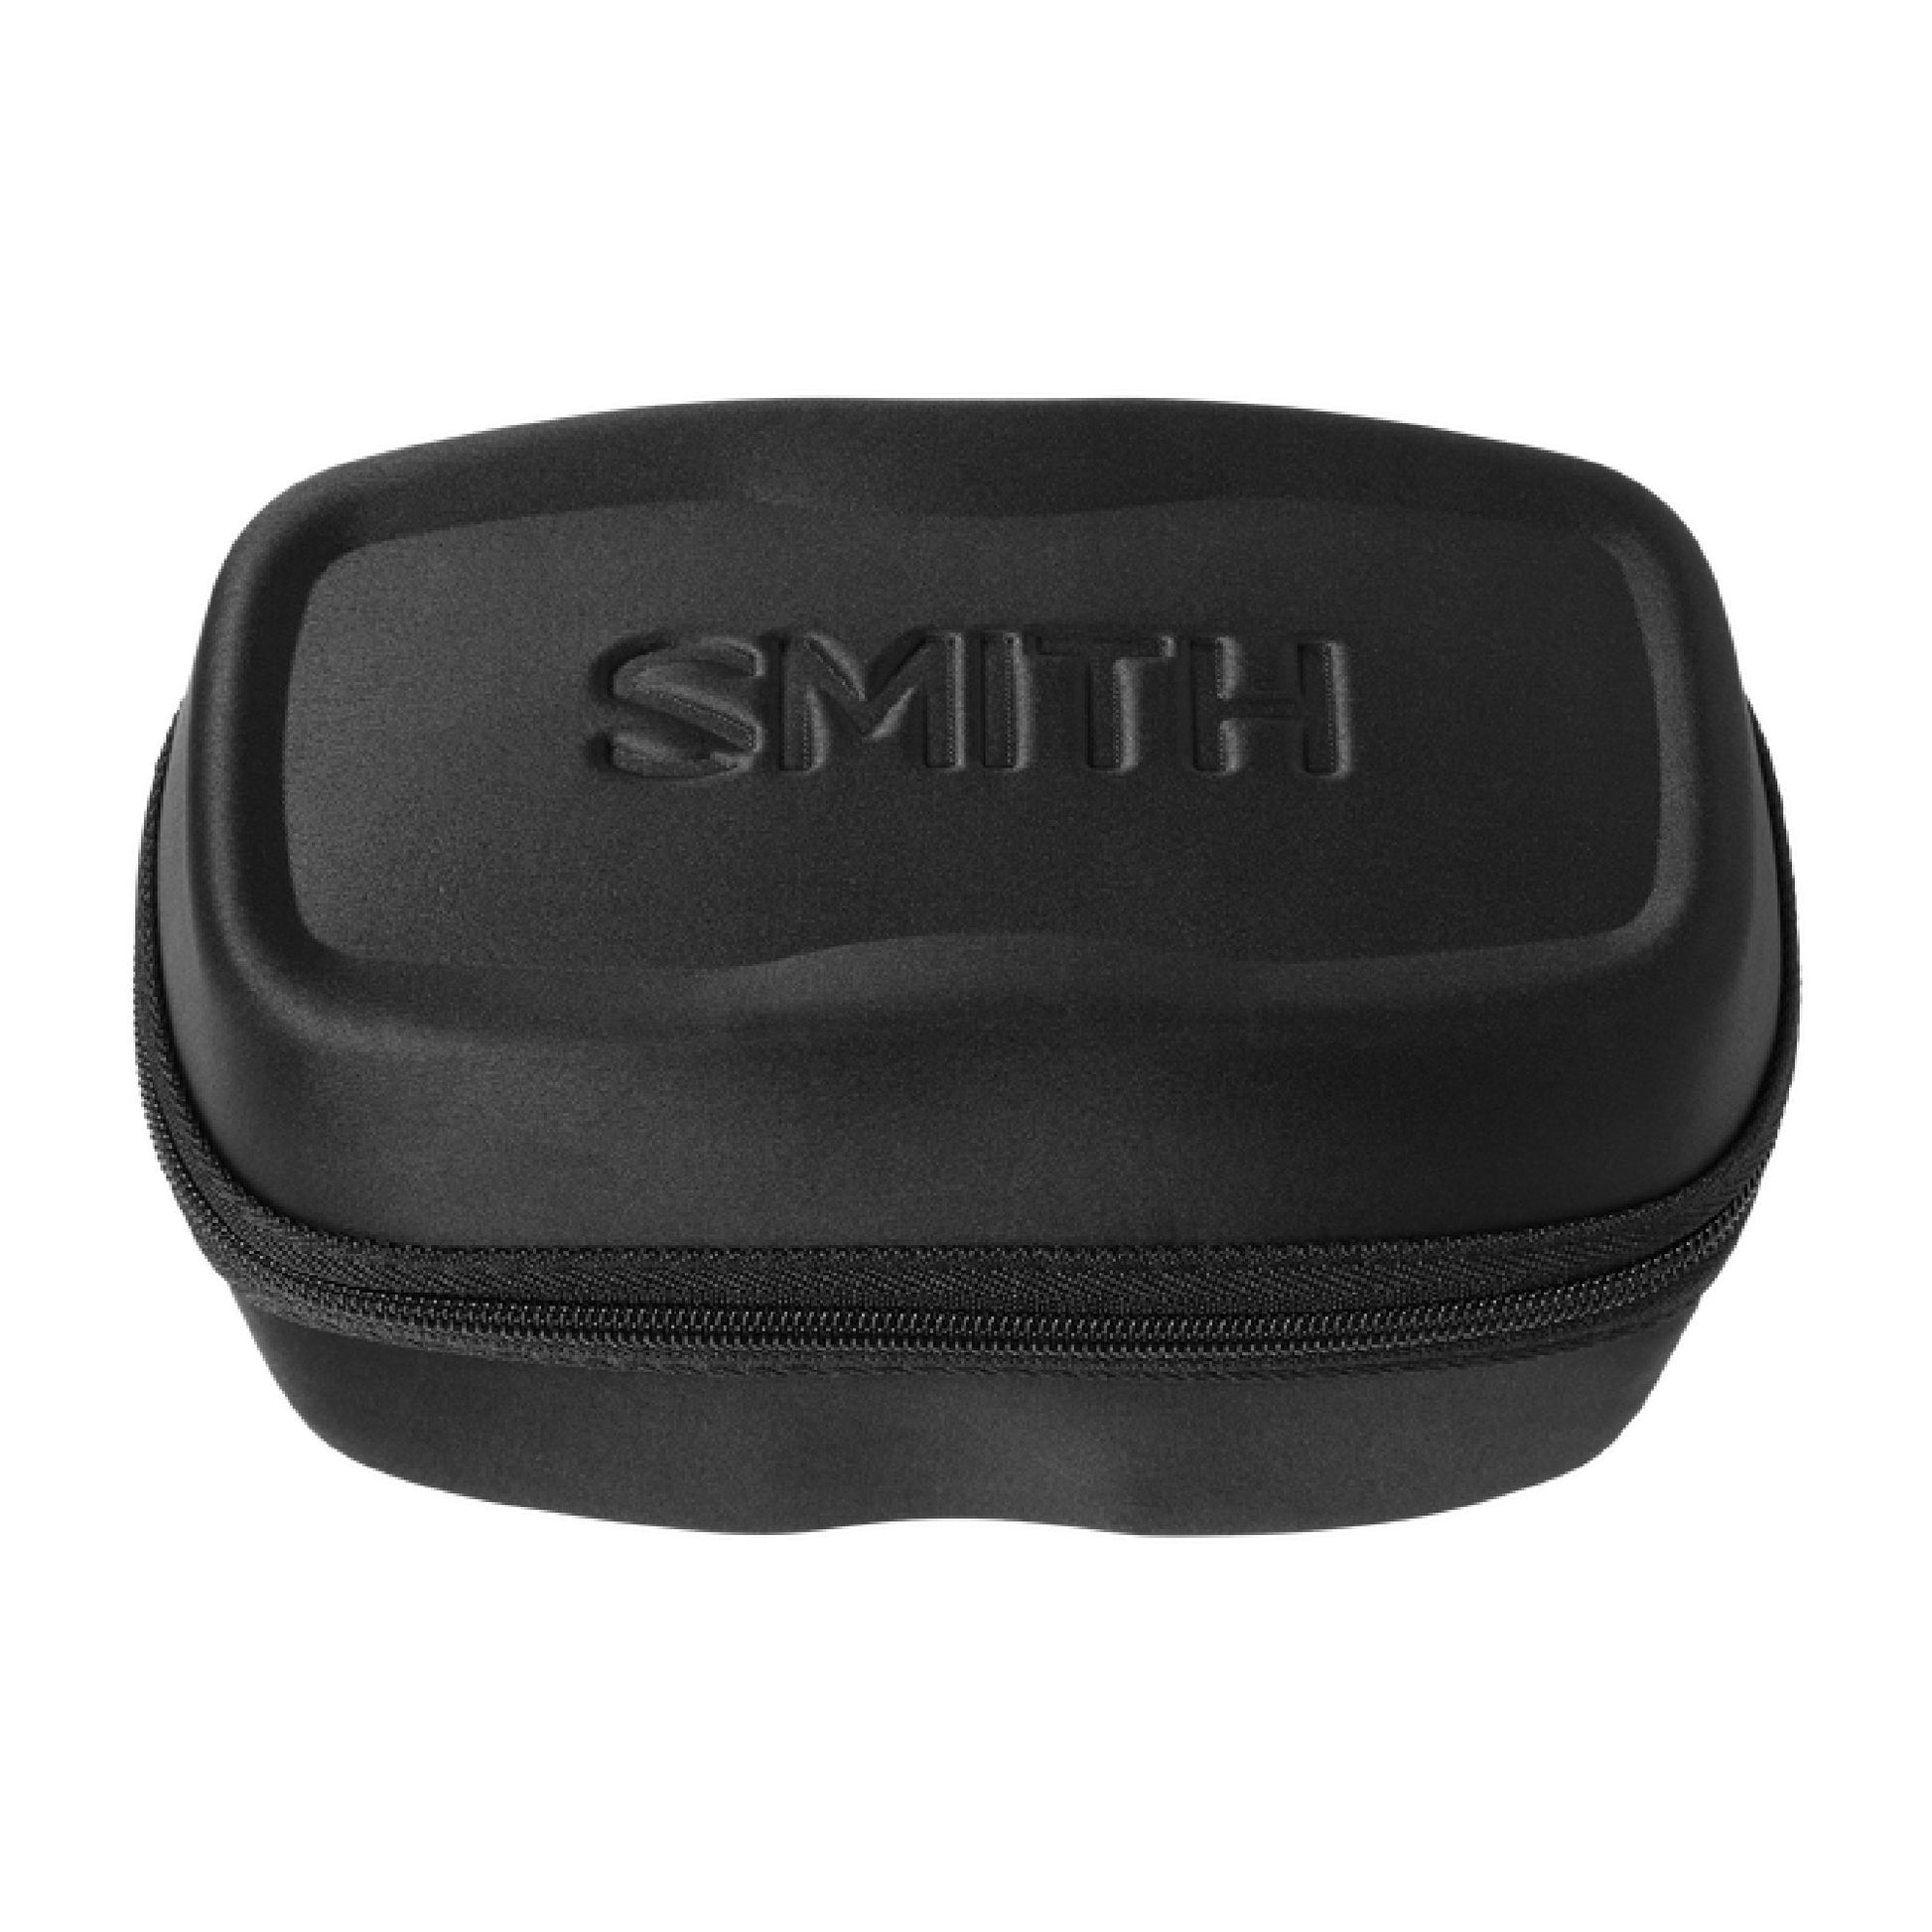 Smith 4D MAG Snow Goggle Vintage Camo / ChromaPop Sun Black Snow Goggles